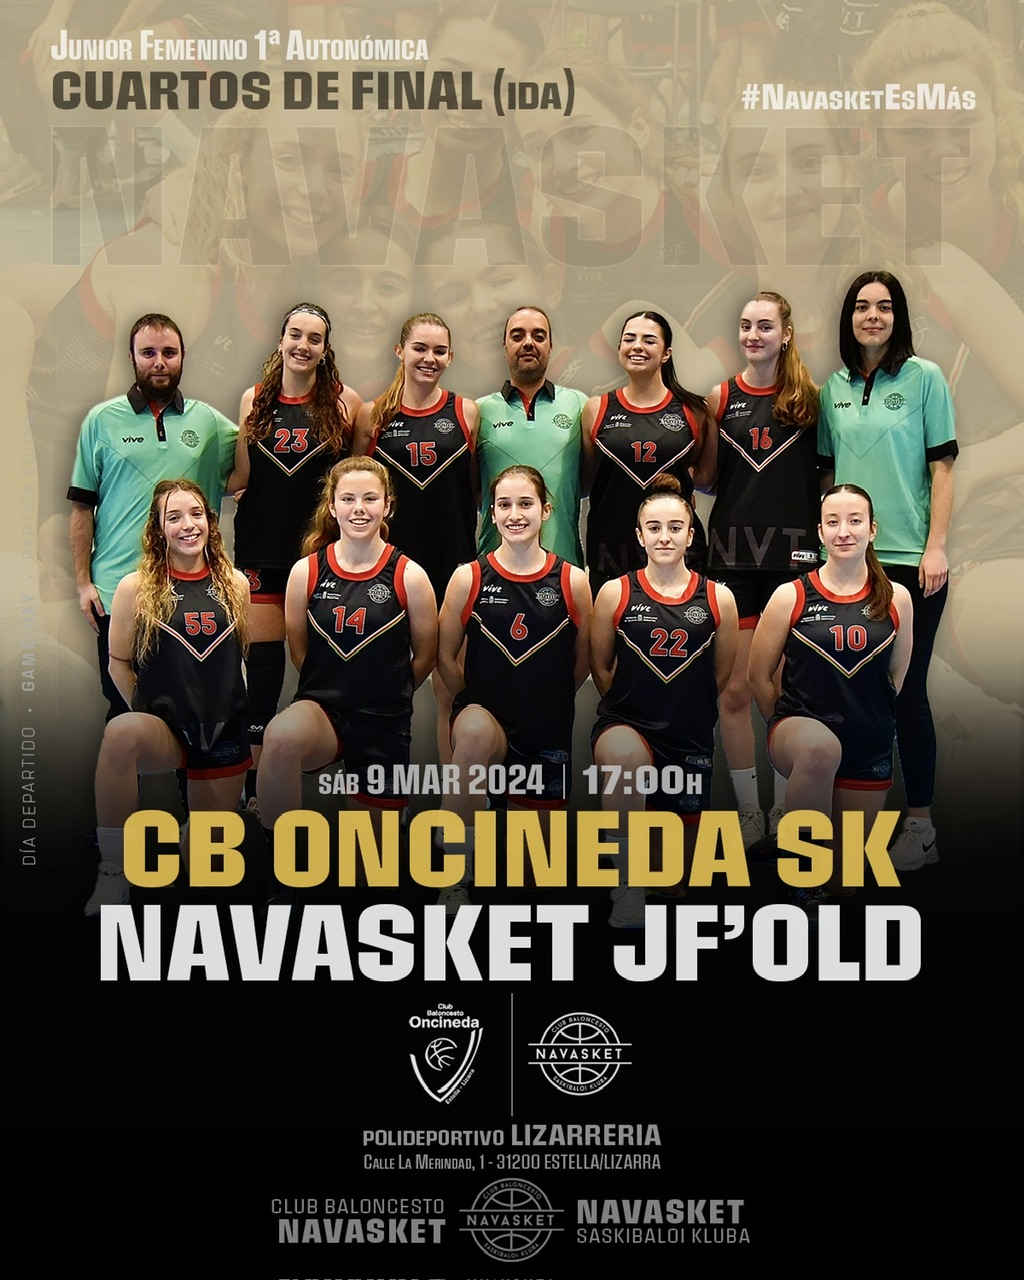 #JunFEM CUARTOS DE FINAL | CB Oncineda SK Navasket JF’old